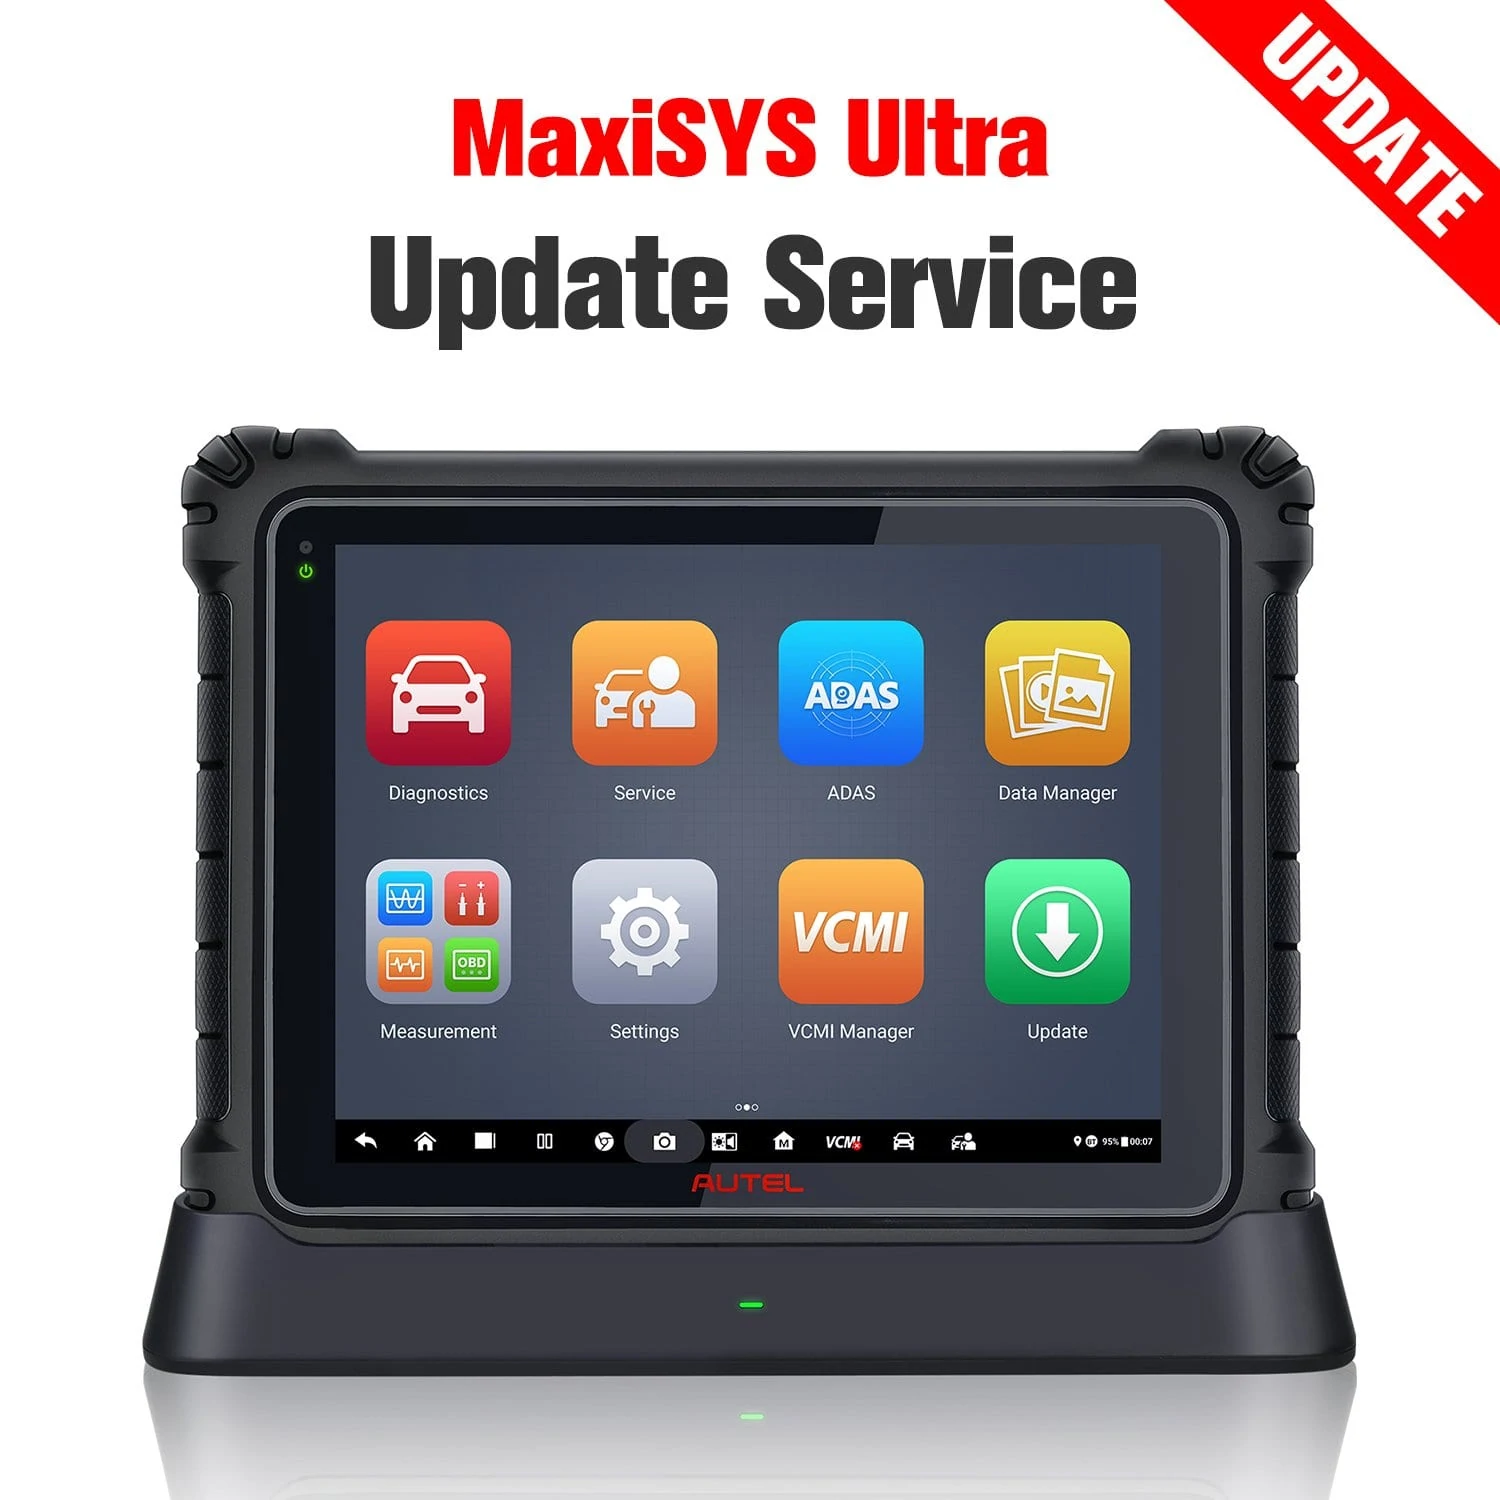 maxisys ultra update service